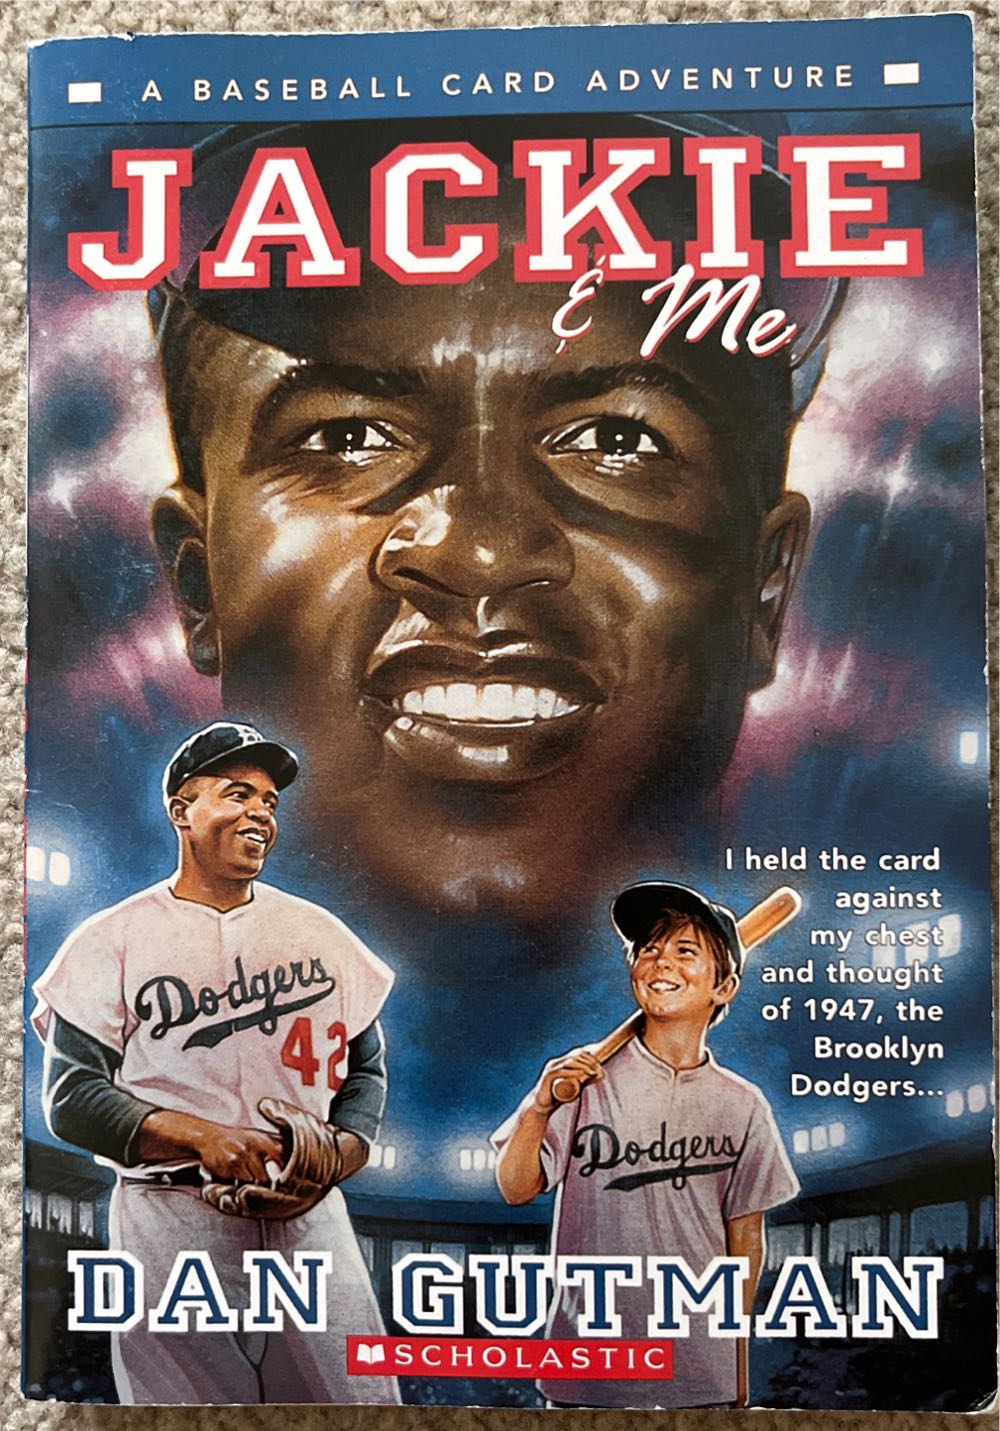 Baseball Card Adventure: Jackie And Me, A - Dan Gutman book collectible [Barcode 9780439584432] - Main Image 3